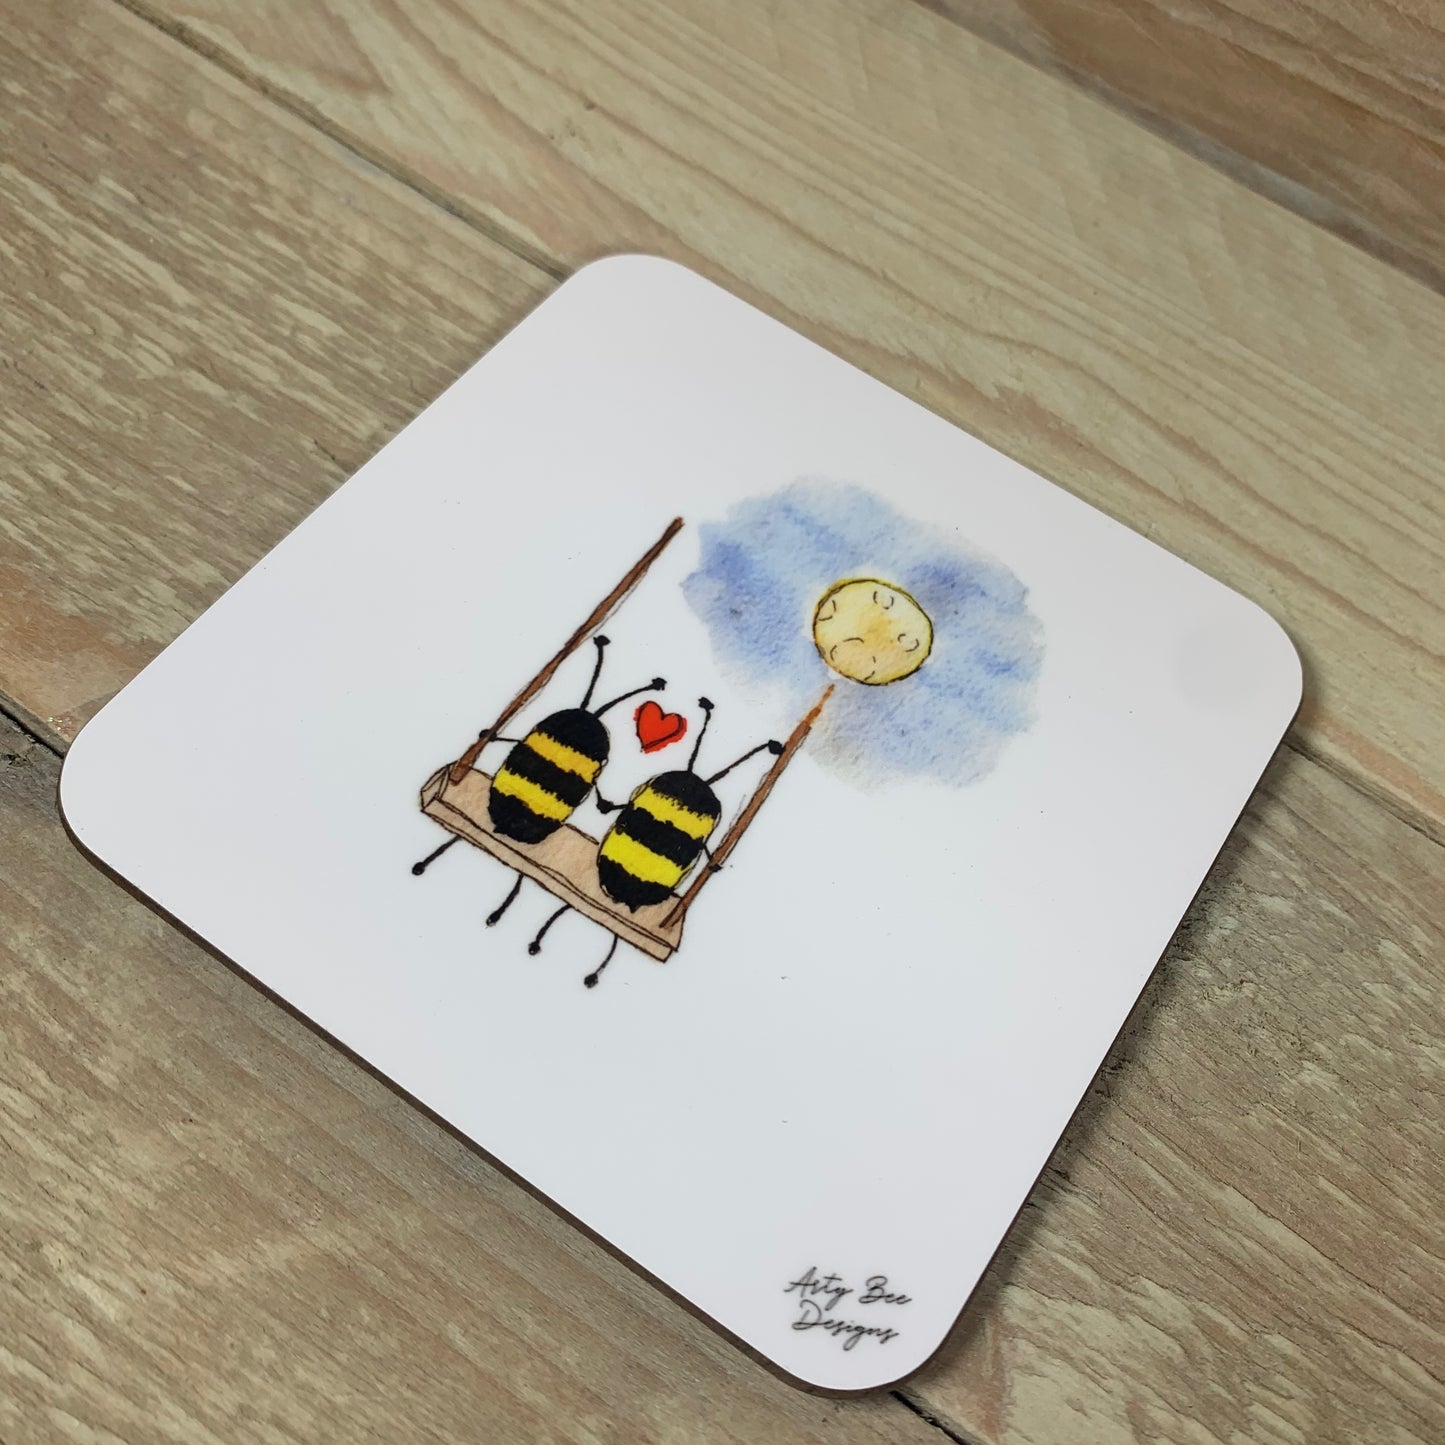 Bee's on Swing Coaster - Arty Bee Designs 